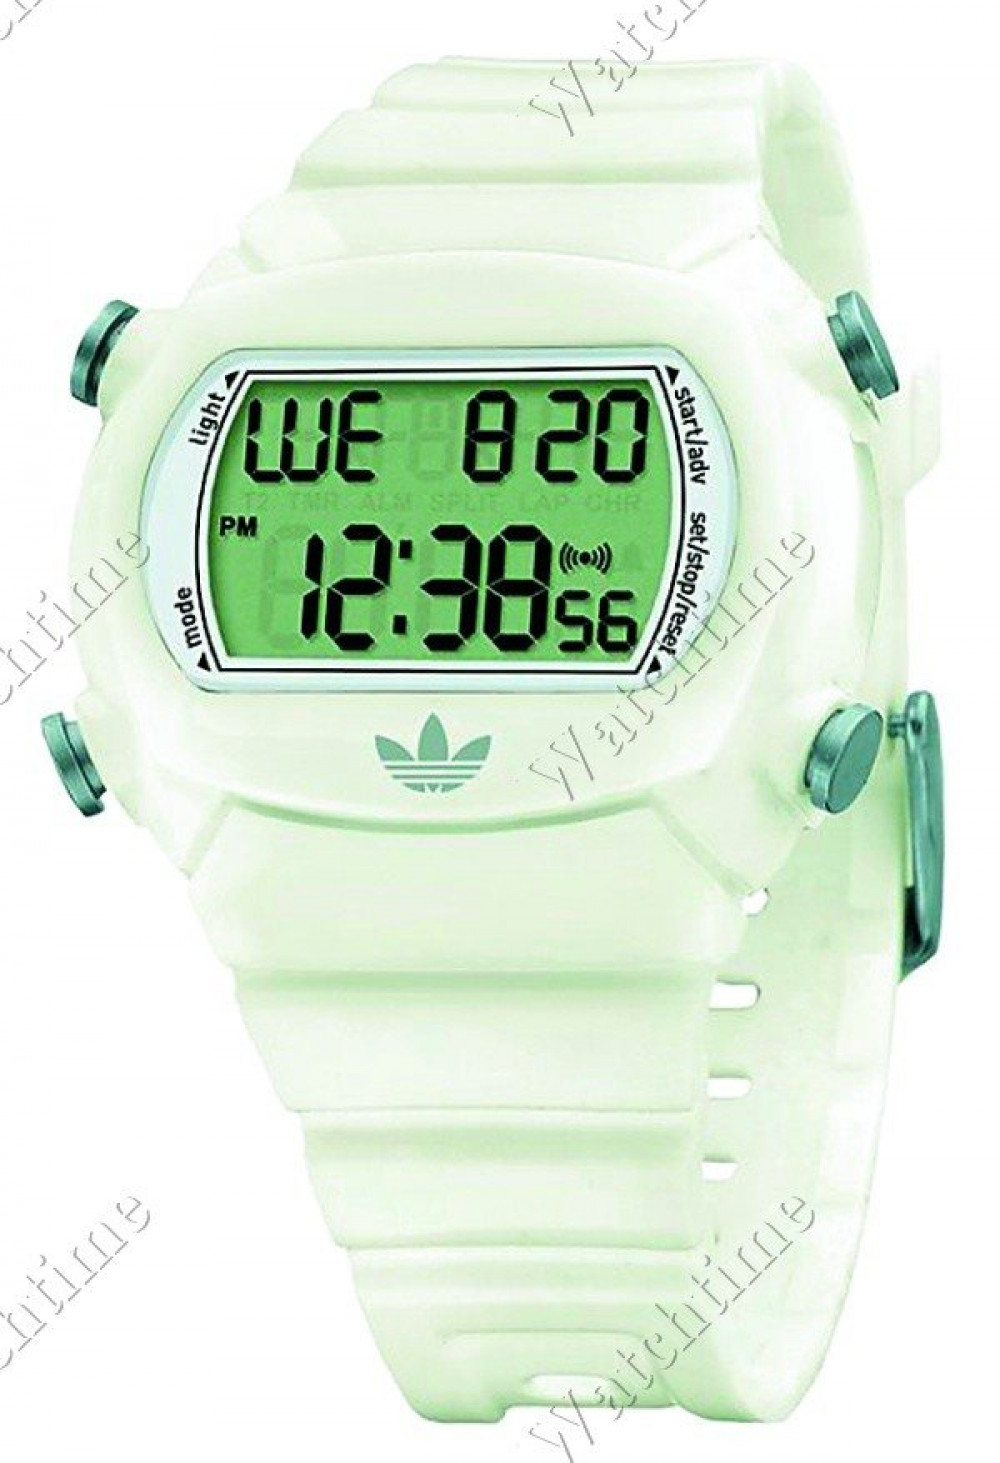 Zegarek firmy Adidas, model ADH 1319